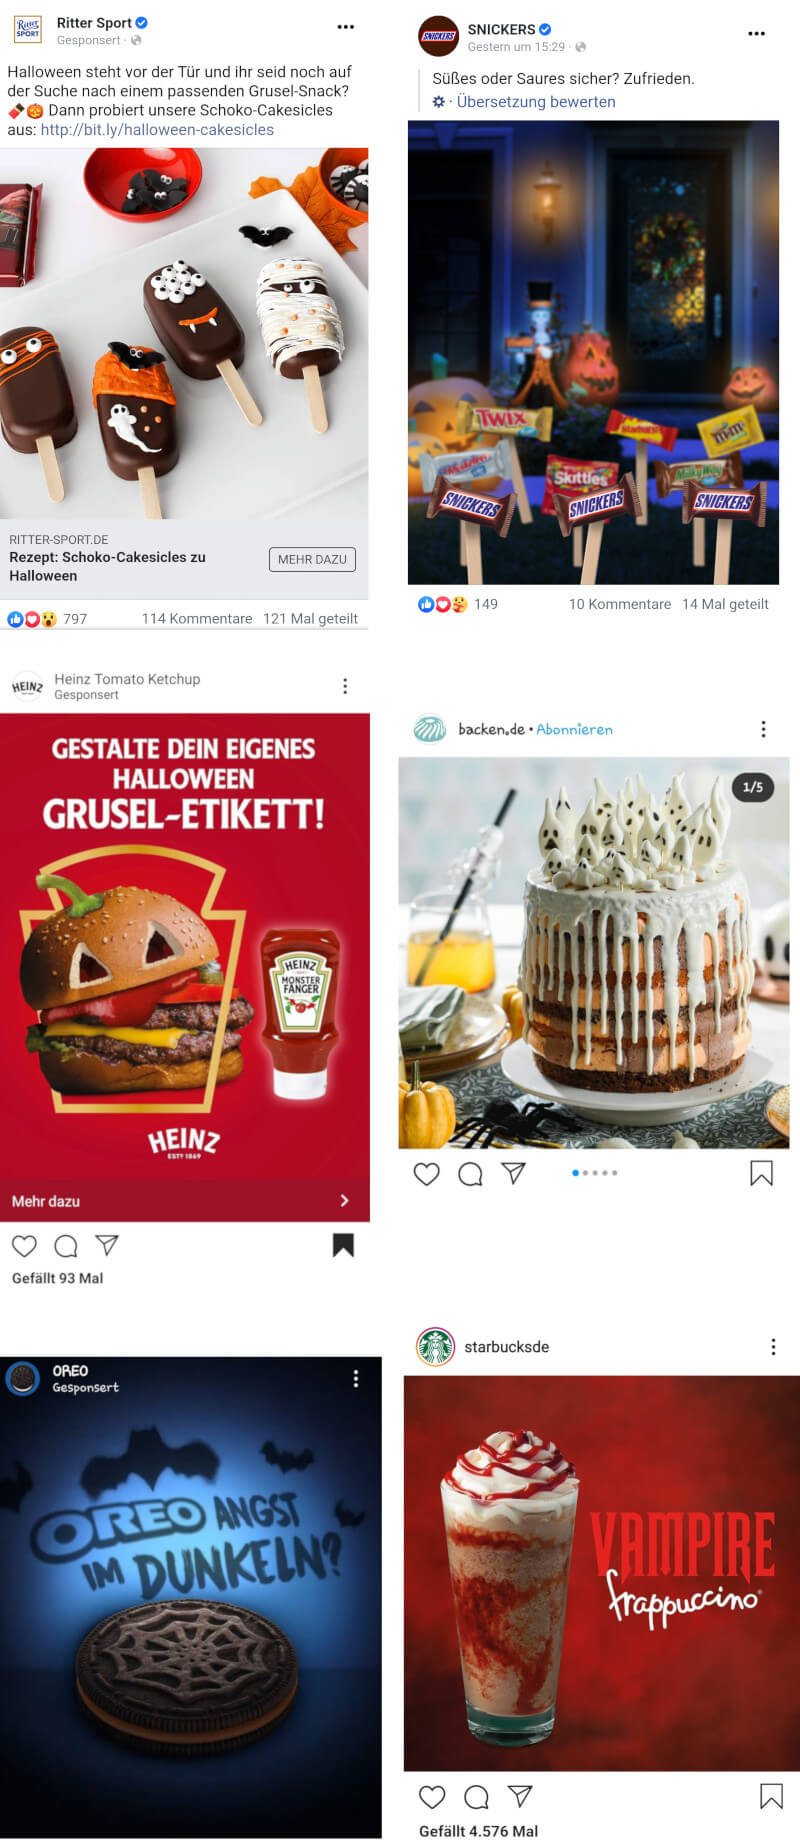 Halloween Marketing 2020 RitterSport Snickers Heinz Backen Oreo Starbucks Screenshots